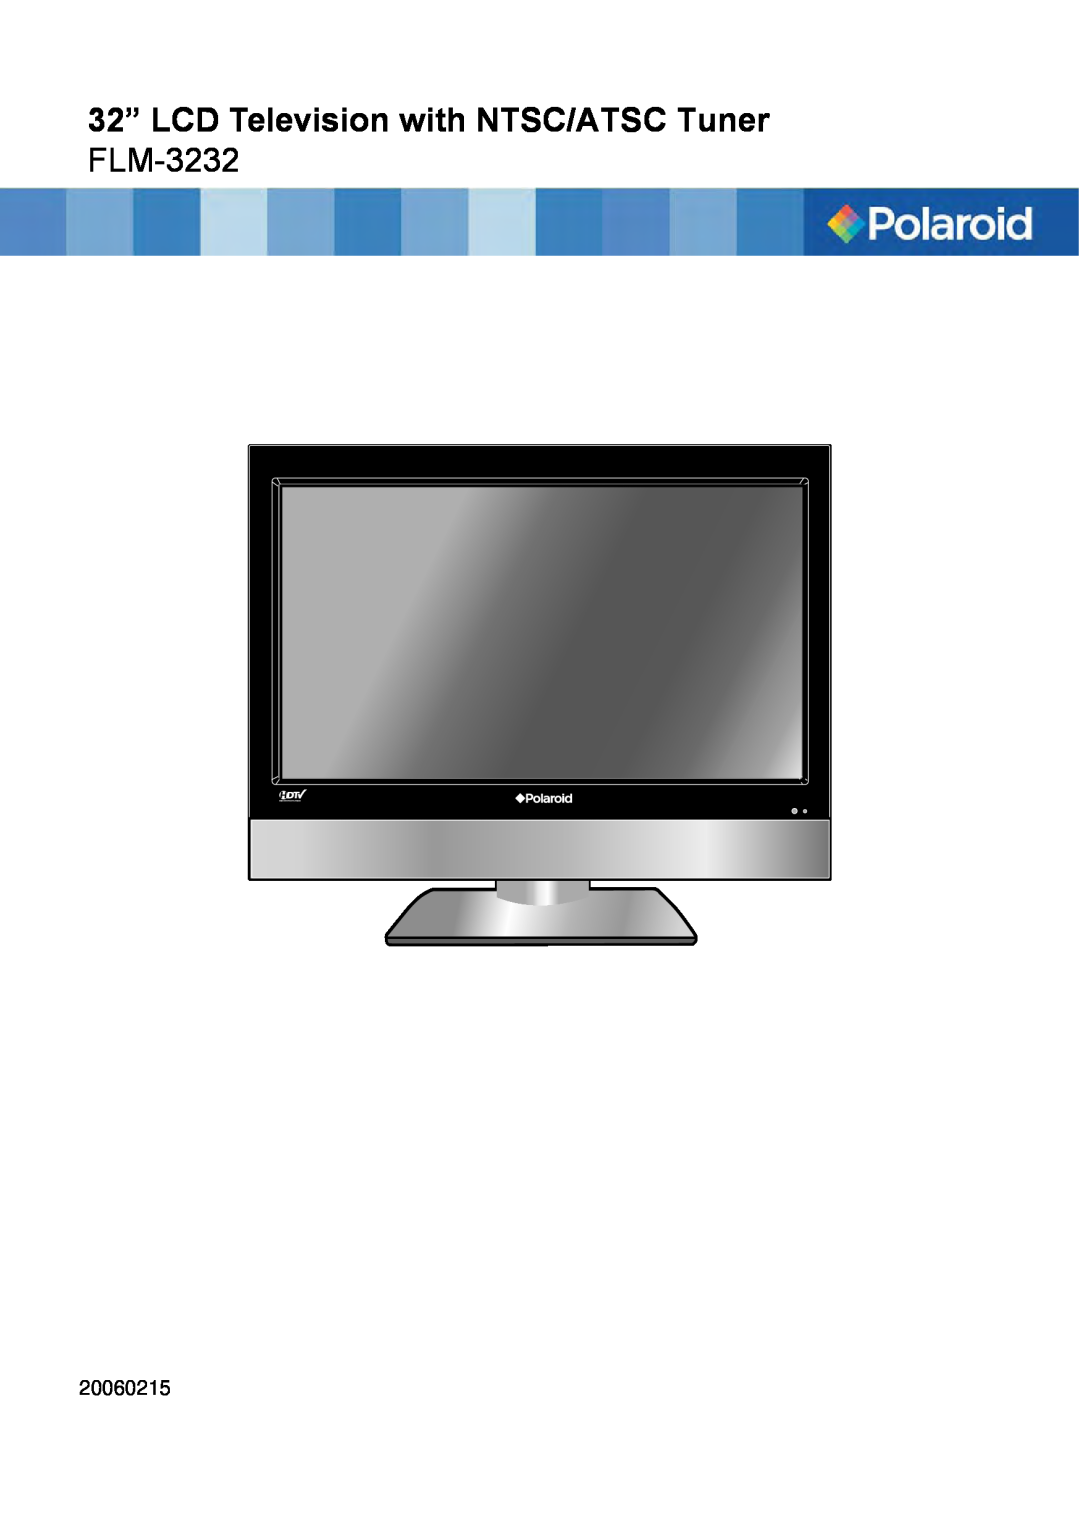 Polaroid FLM-3232 manual 32” LCD Television with NTSC/ATSC Tuner, 20060215 